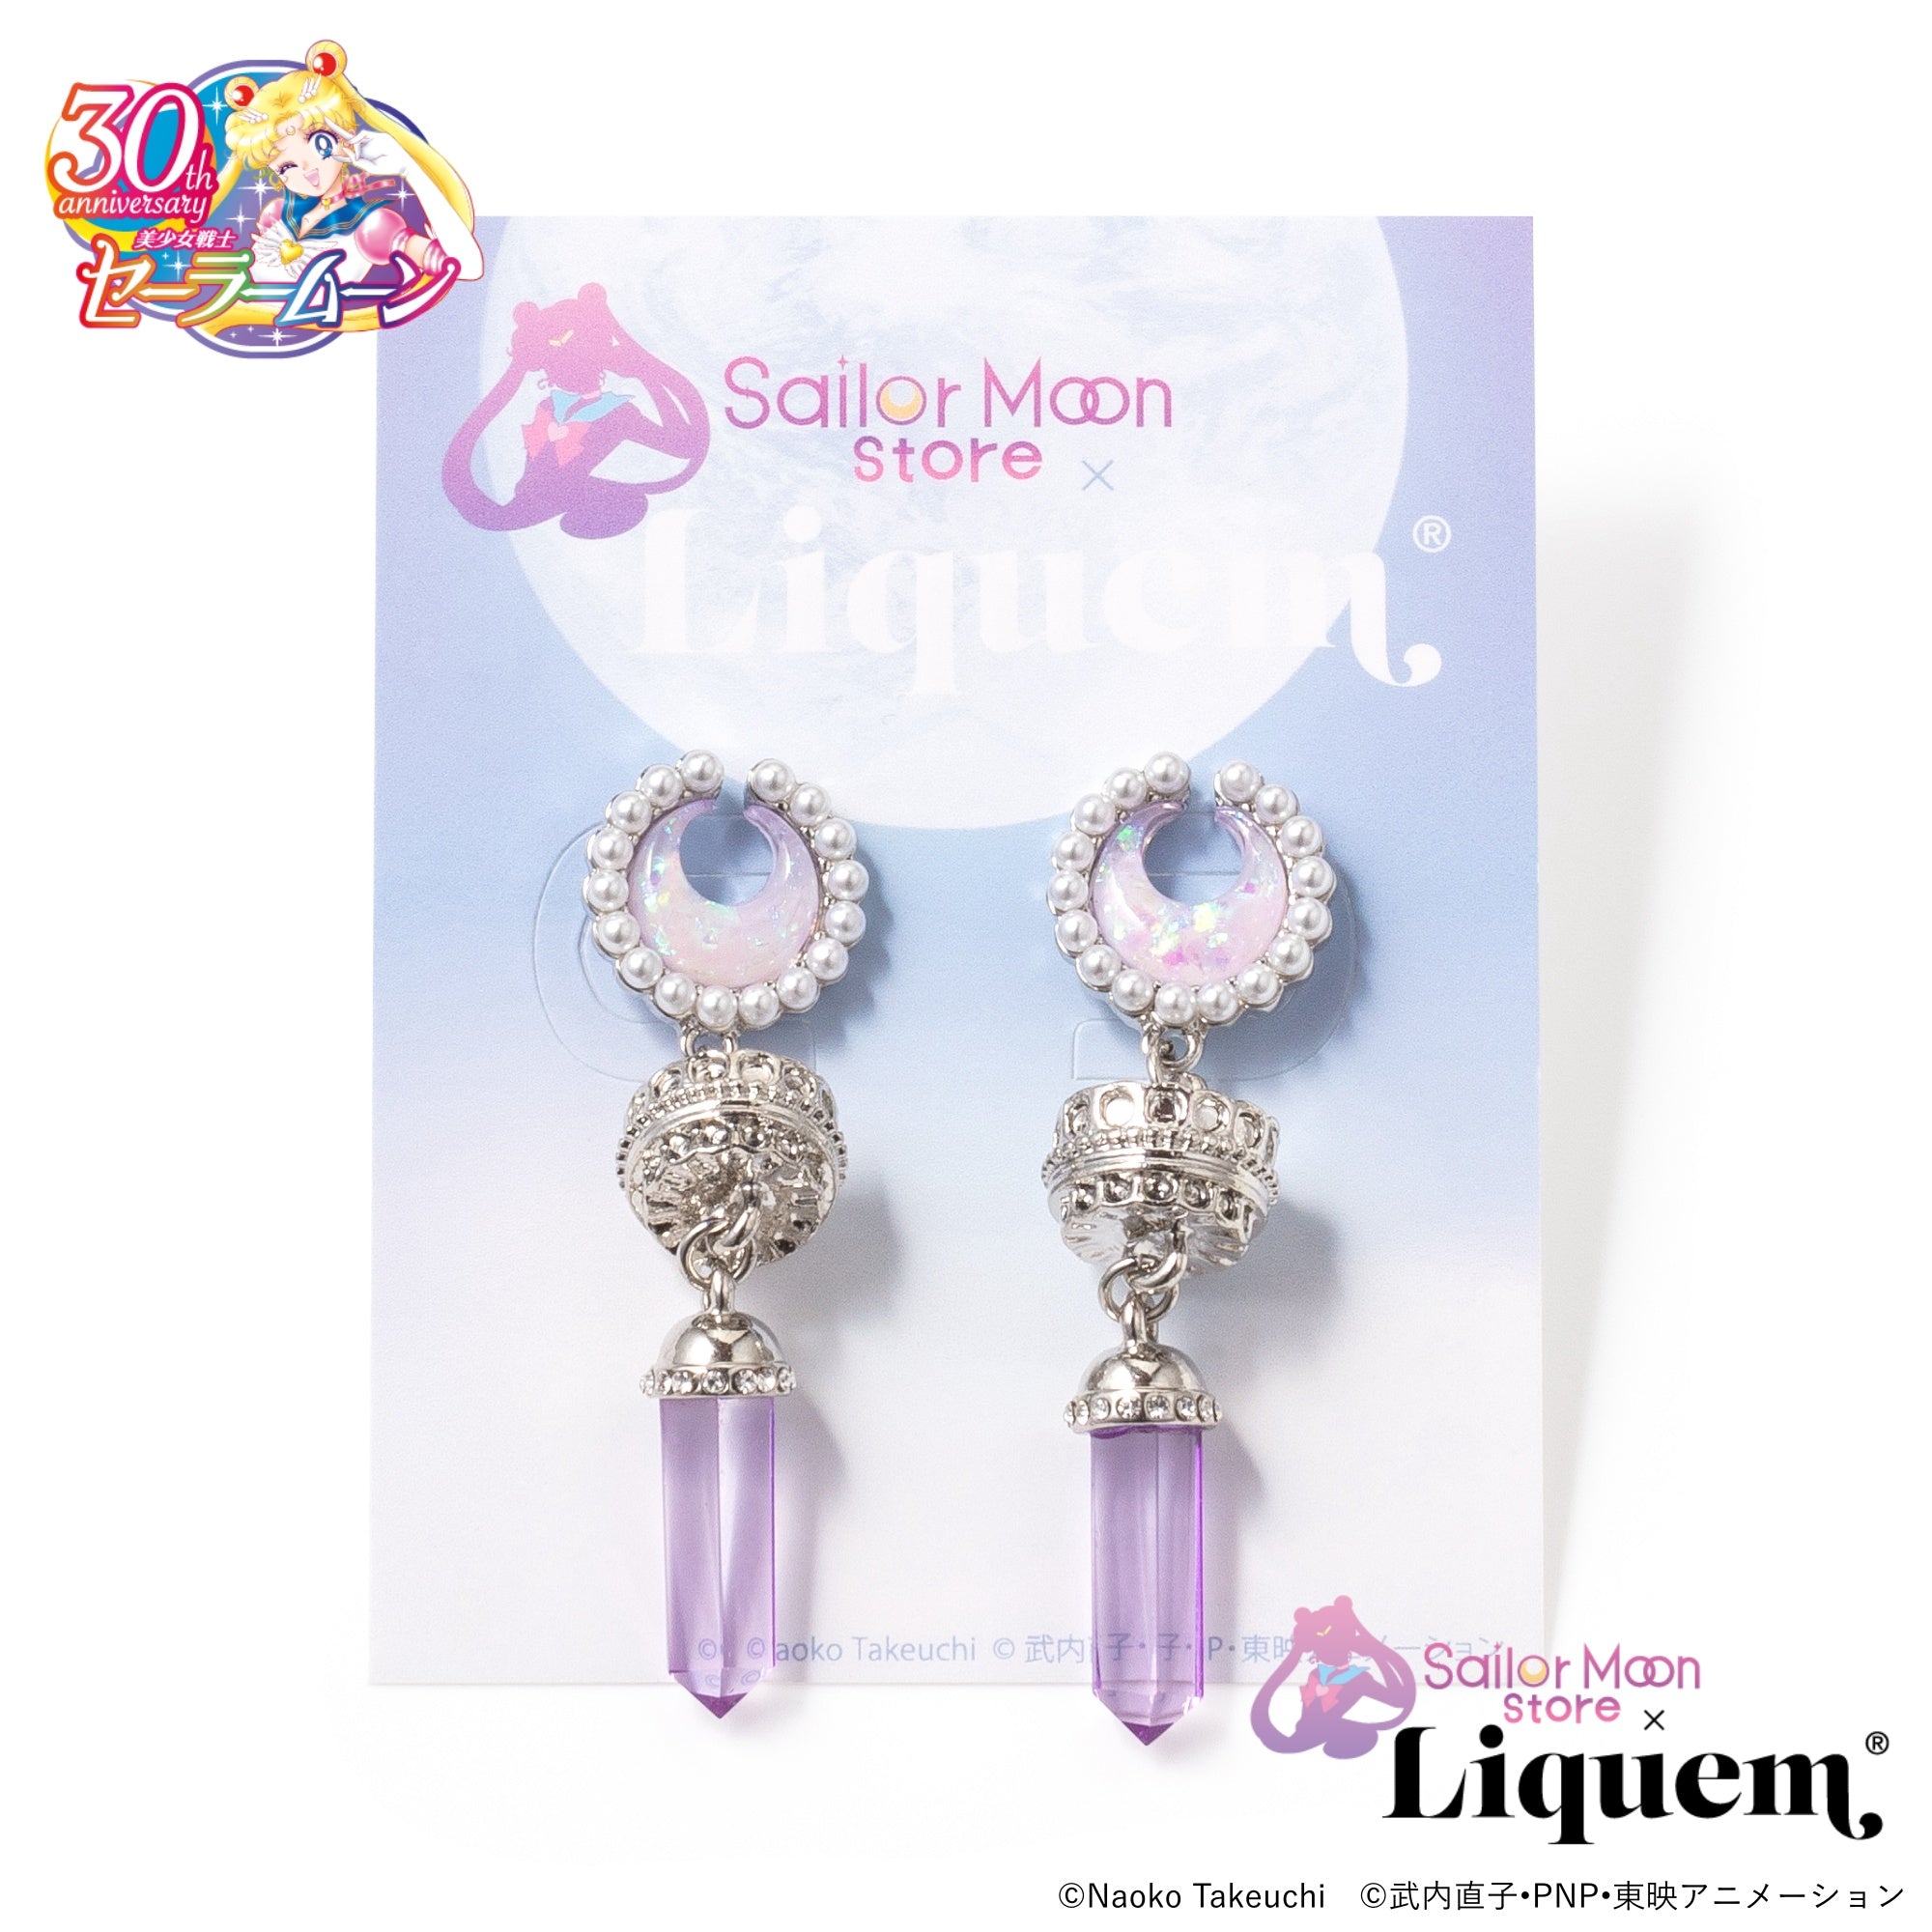 Sailor Moon store x Liquem / Liquem限定プリンセス・セレニティ 